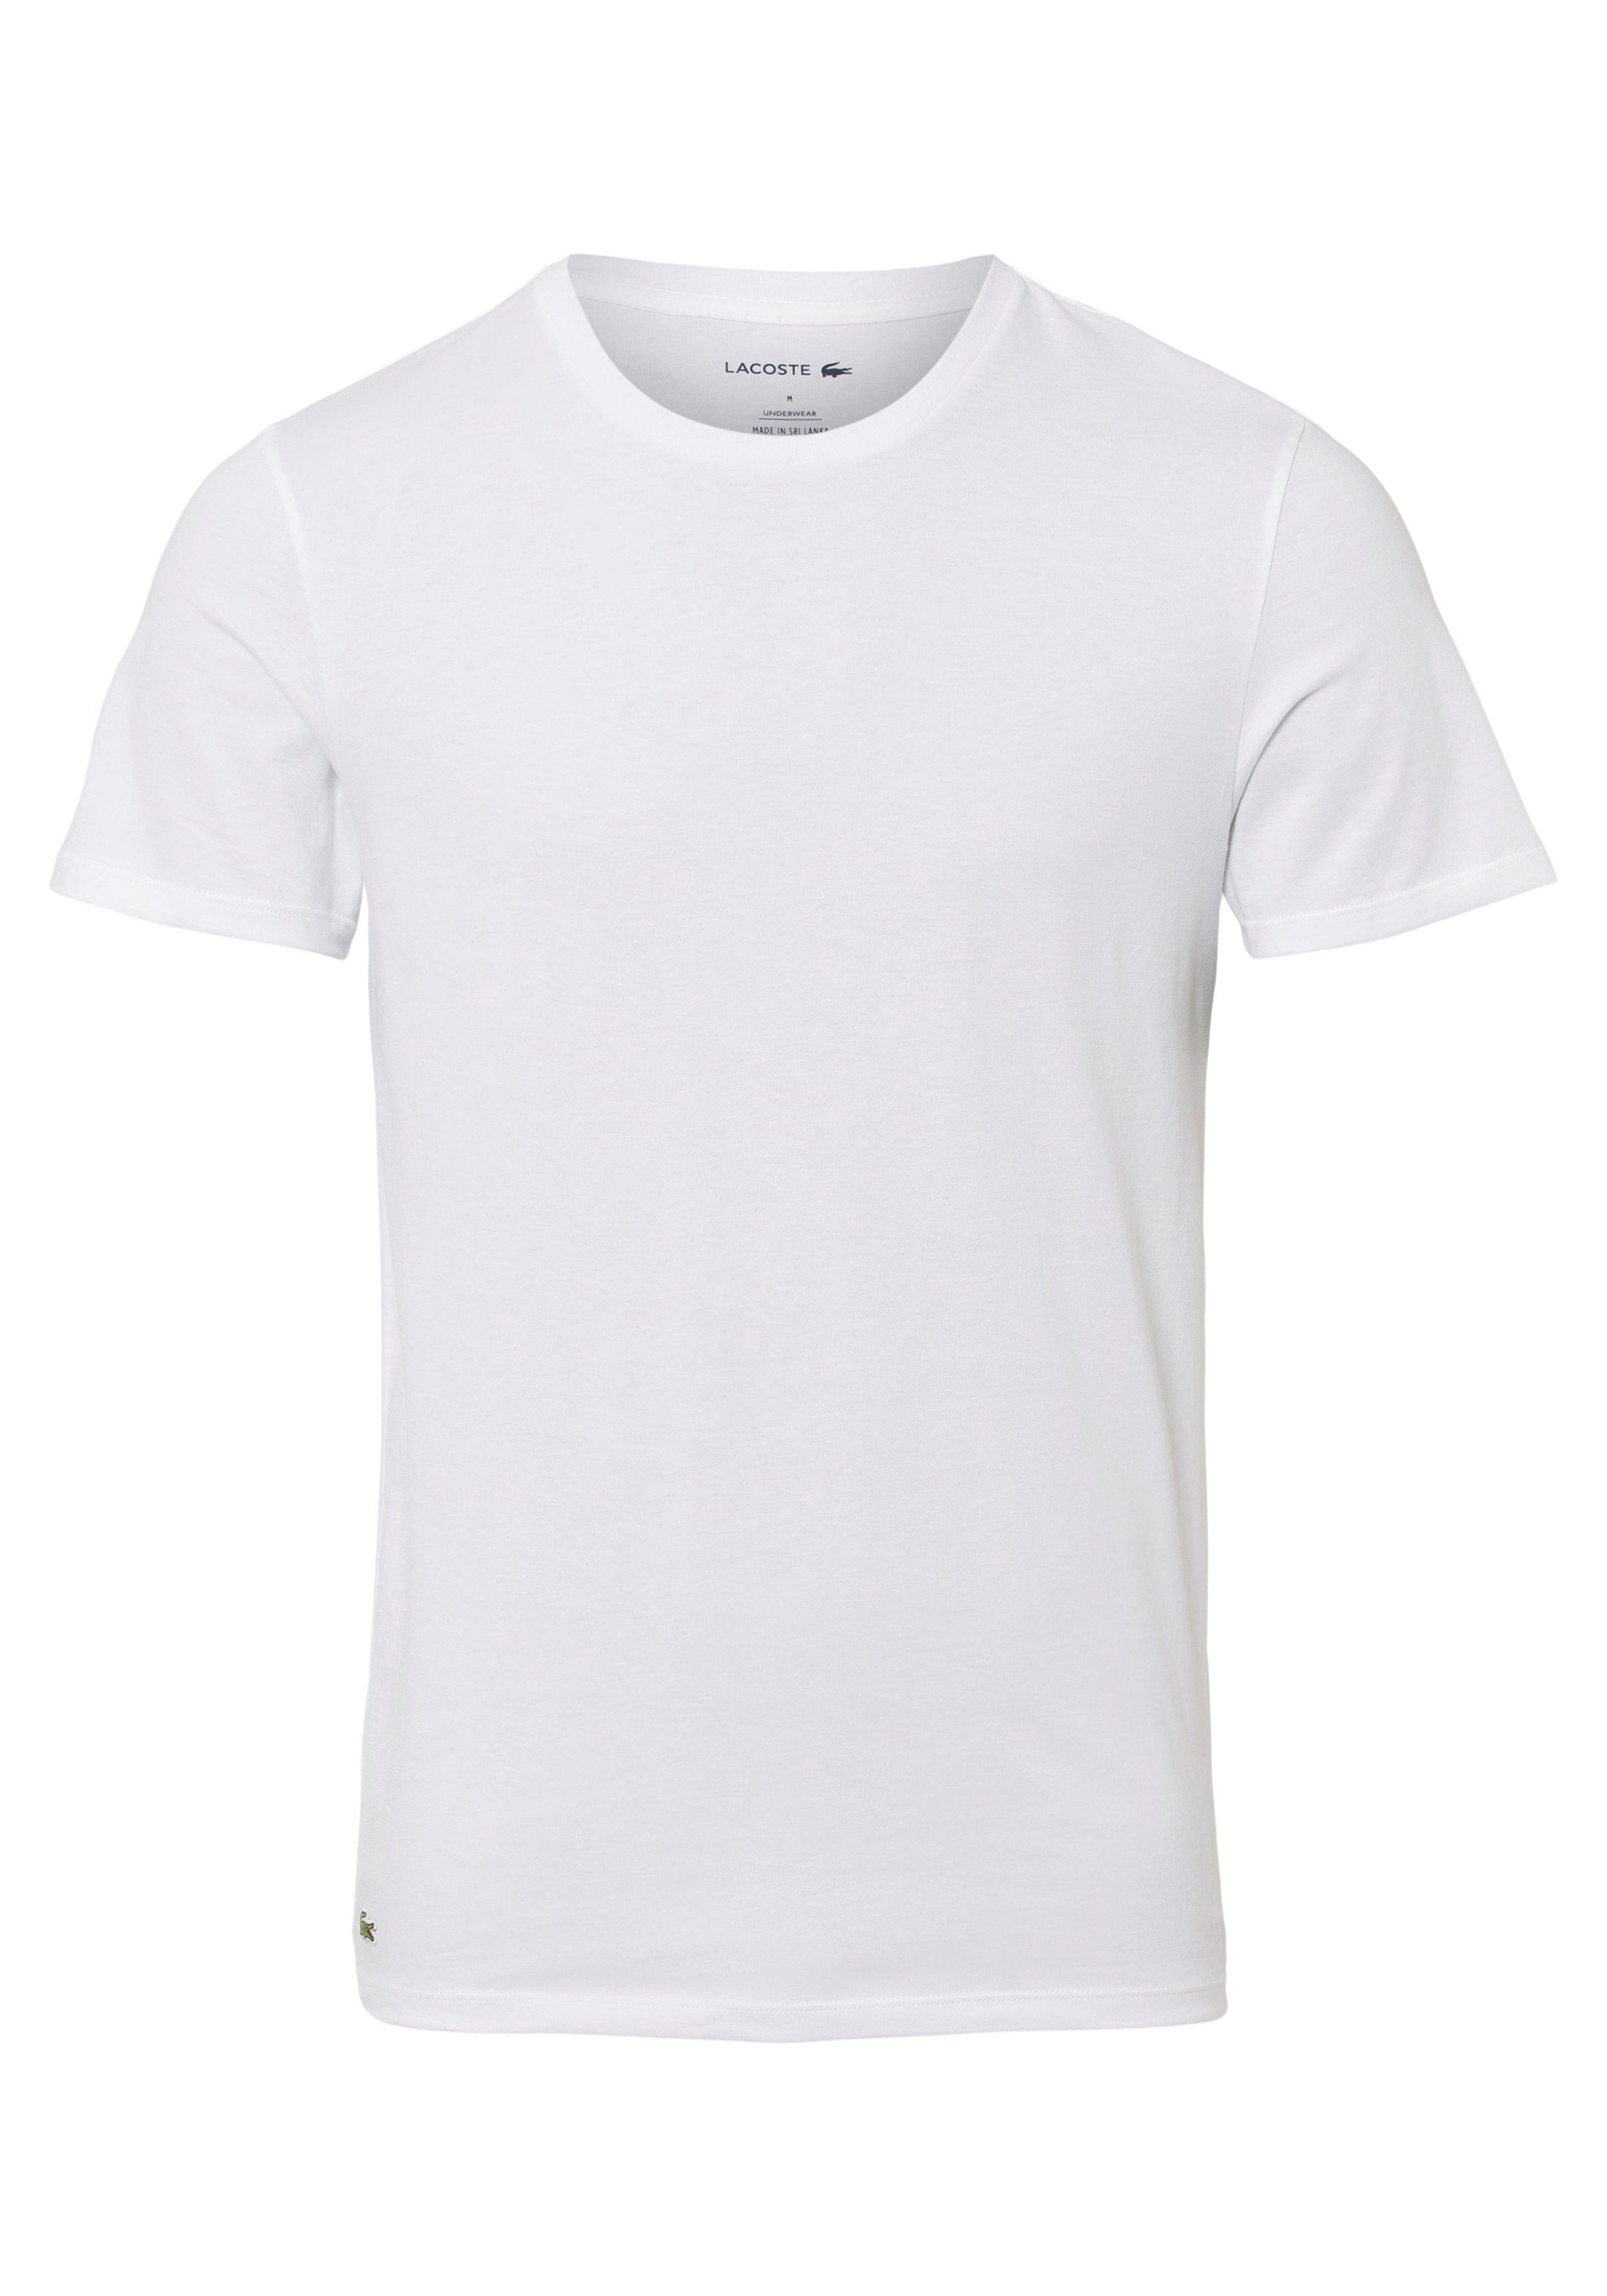 weiß T-Shirt (3er-Pack) angenehmes Atmungsaktives Baumwollmaterial Hautgefühl Lacoste für